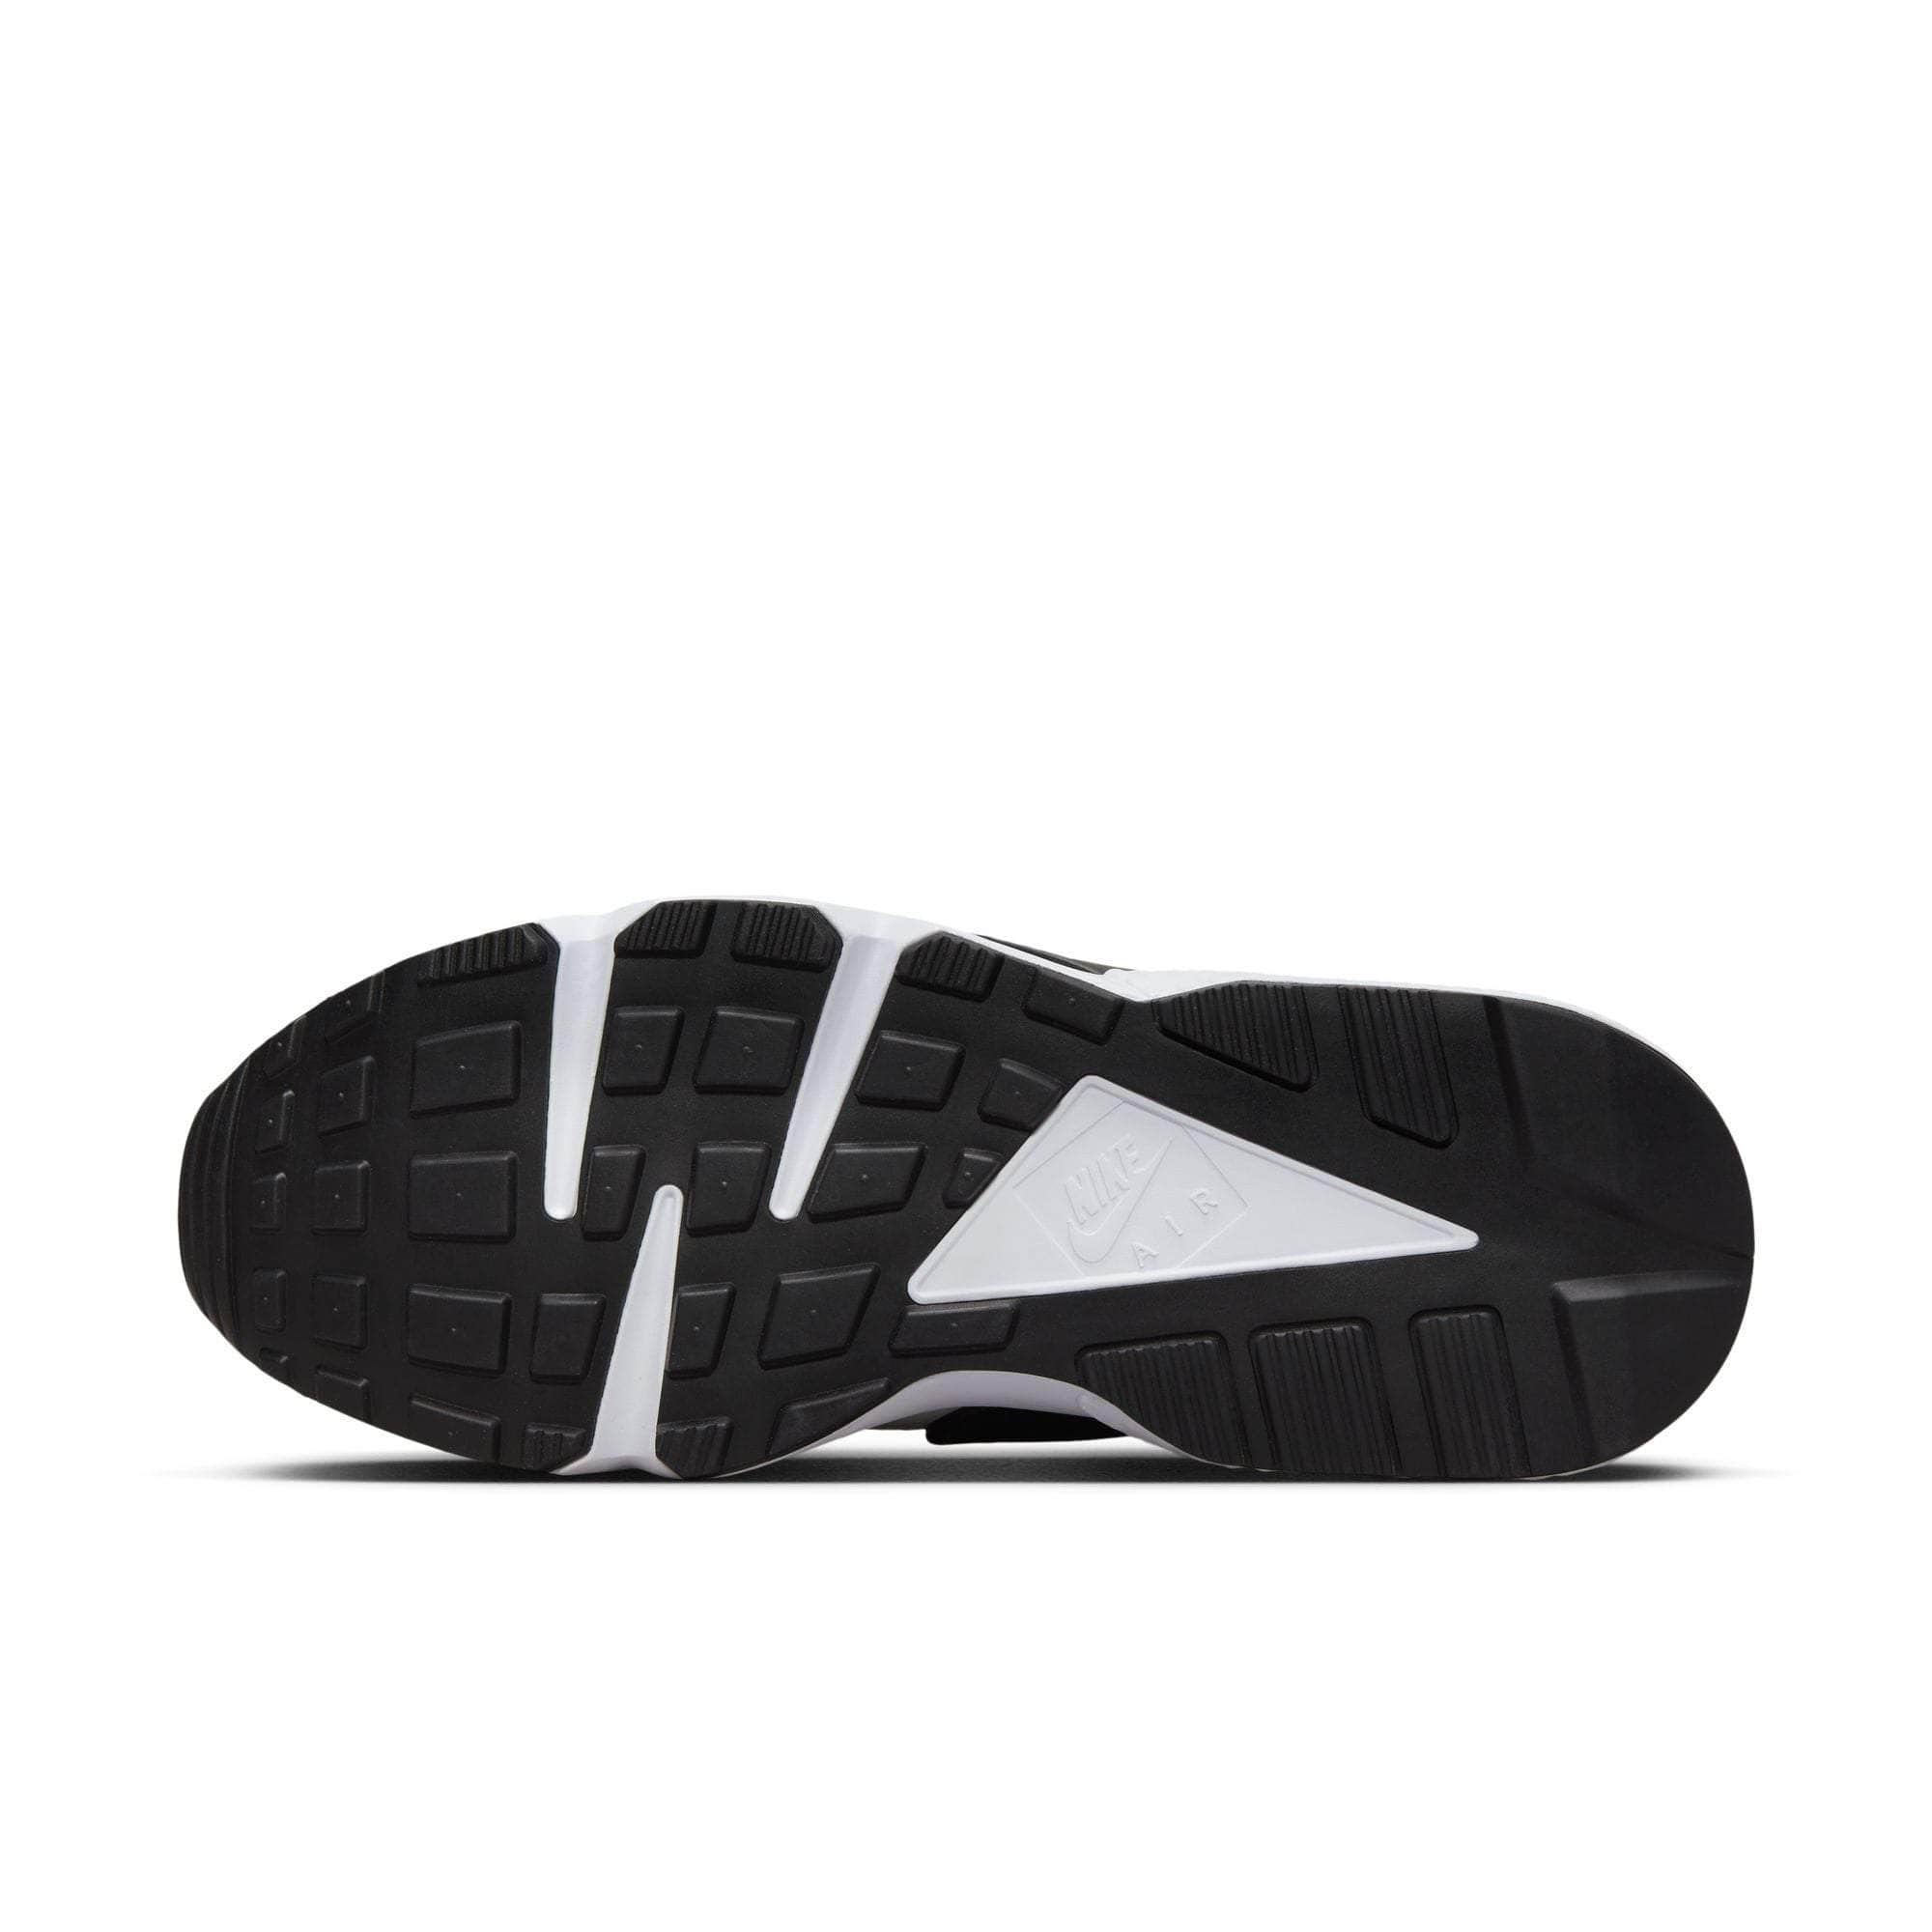 NIKE FOOTWEAR Nike Air Huarache “Icons” - Men's